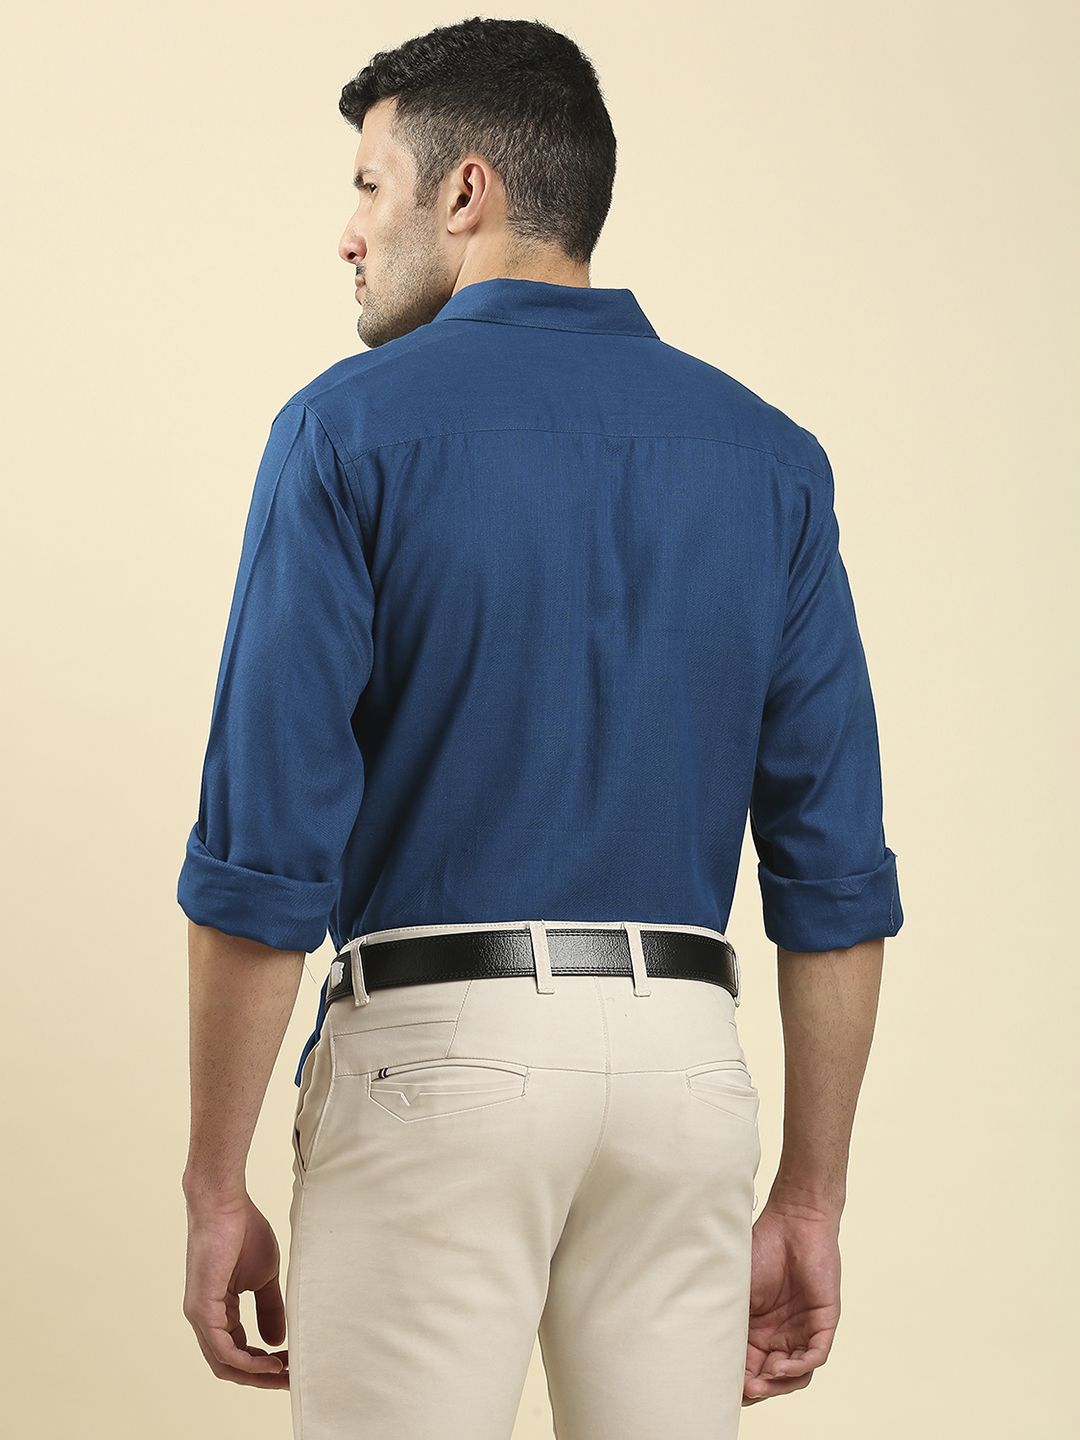 Regular Fit Resort shirt - Navy blue - Men | H&M IN